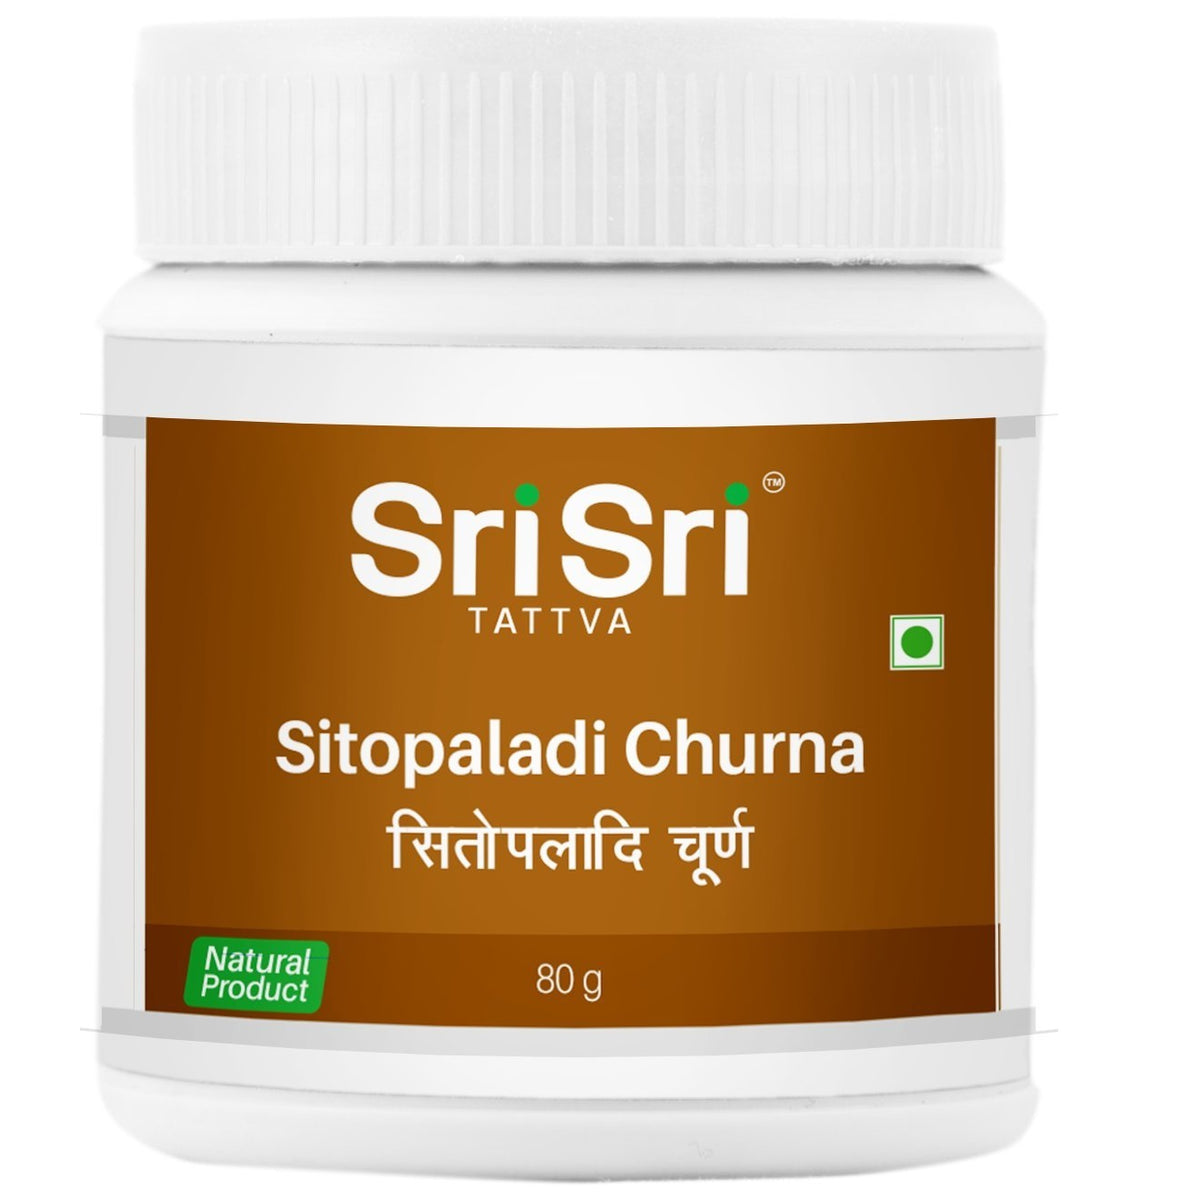 Sri Sri Tattva Ayurvedic Sitopaladi Churna Powder 80g